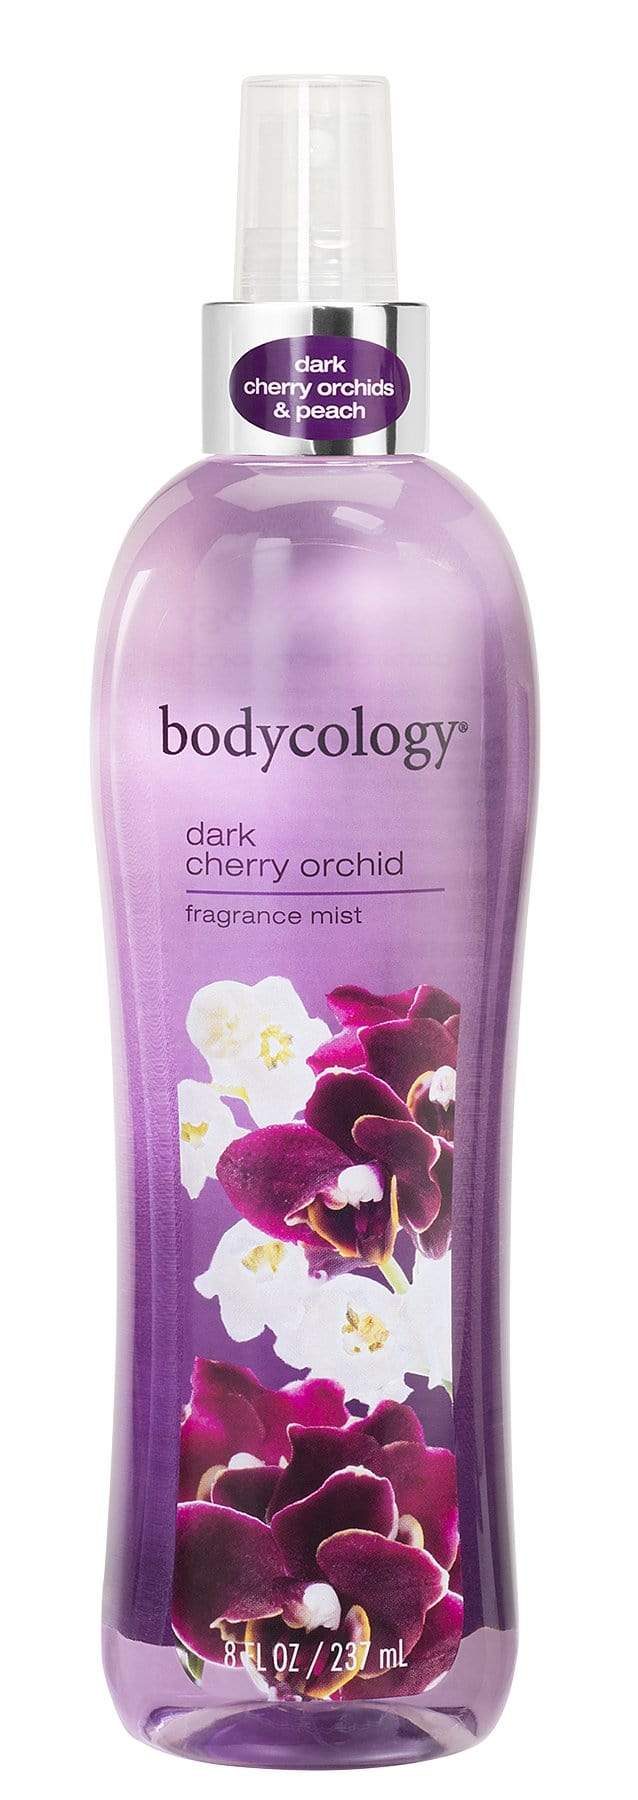 BODYCOLOGY Dark Cherry Orchid Mist Body Spray 237 ml1035864PK - Jashanmal Home